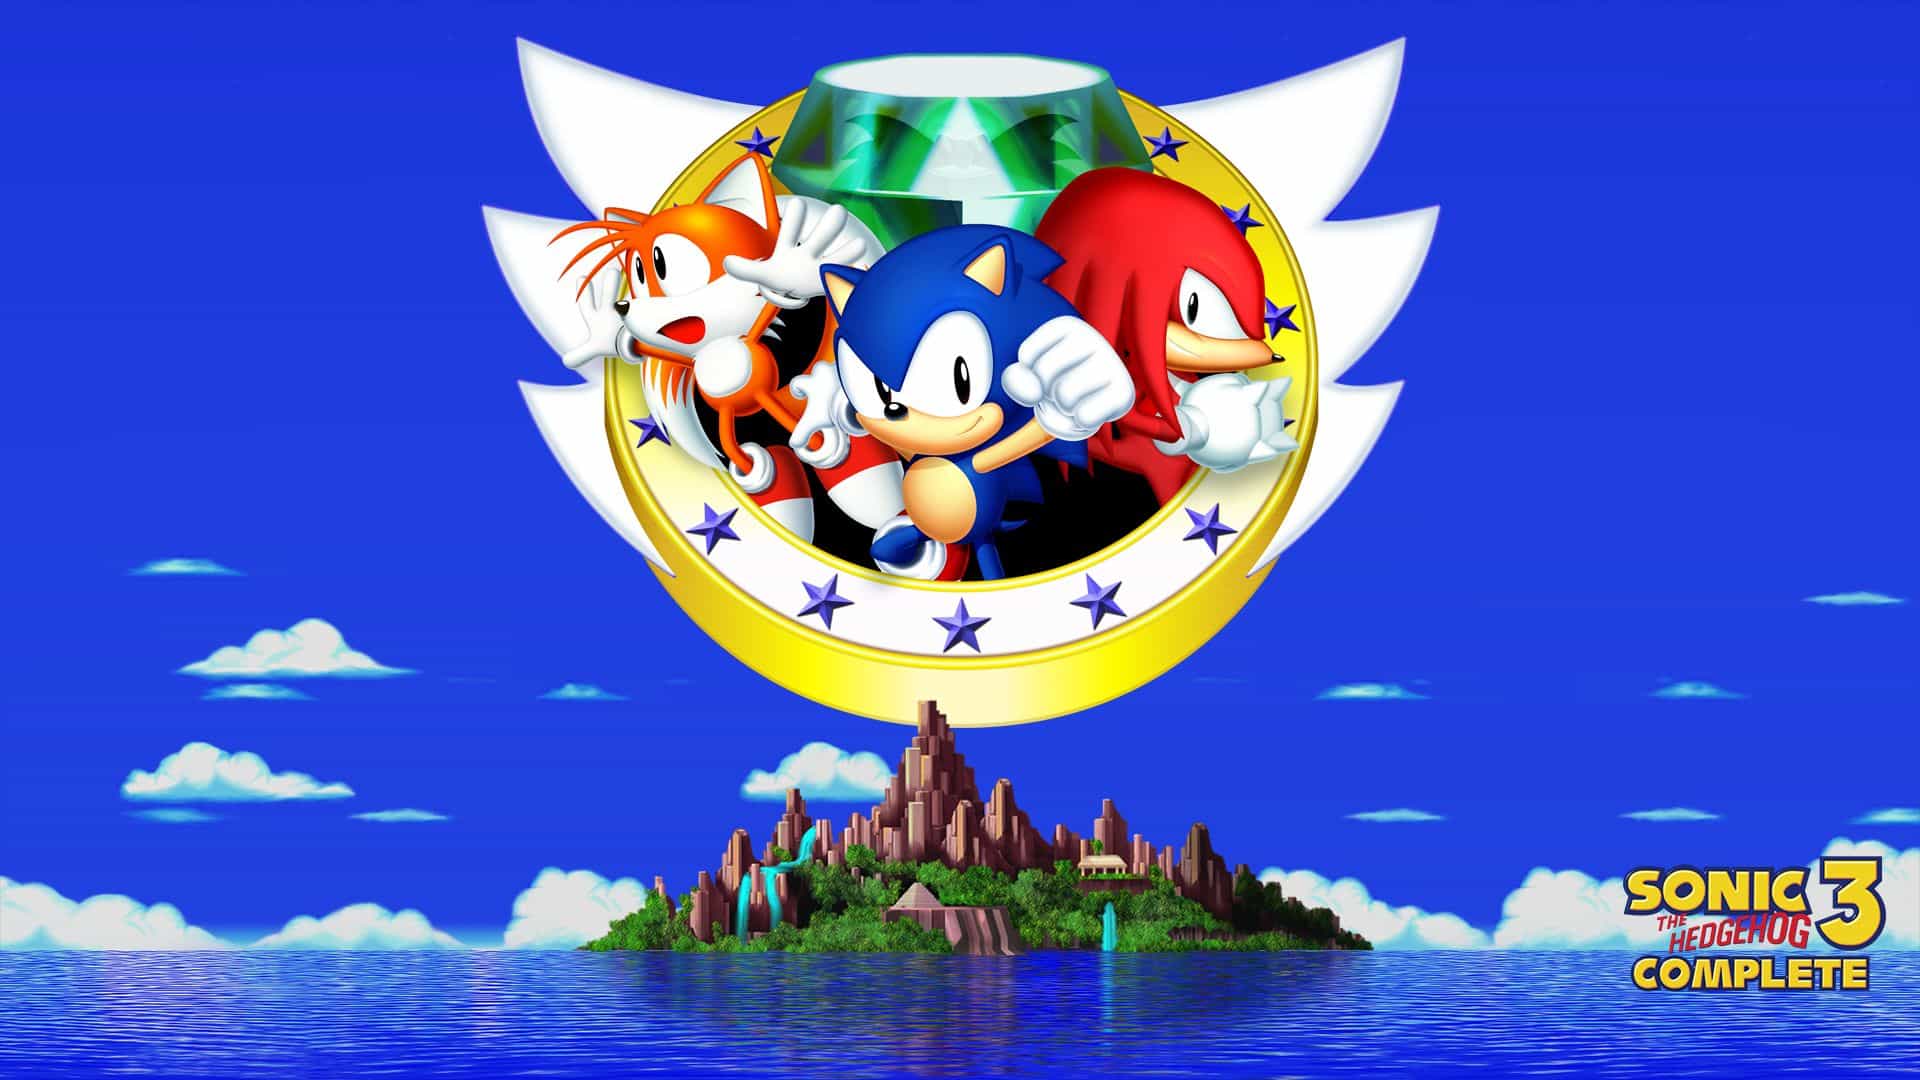 Sonic the Hedgehog 2 Wallpaper. Shadow the Hedgehog Wallpaper, Silver Hedgehog Wallpaper and Ashura the Hedgehog Wallpaper